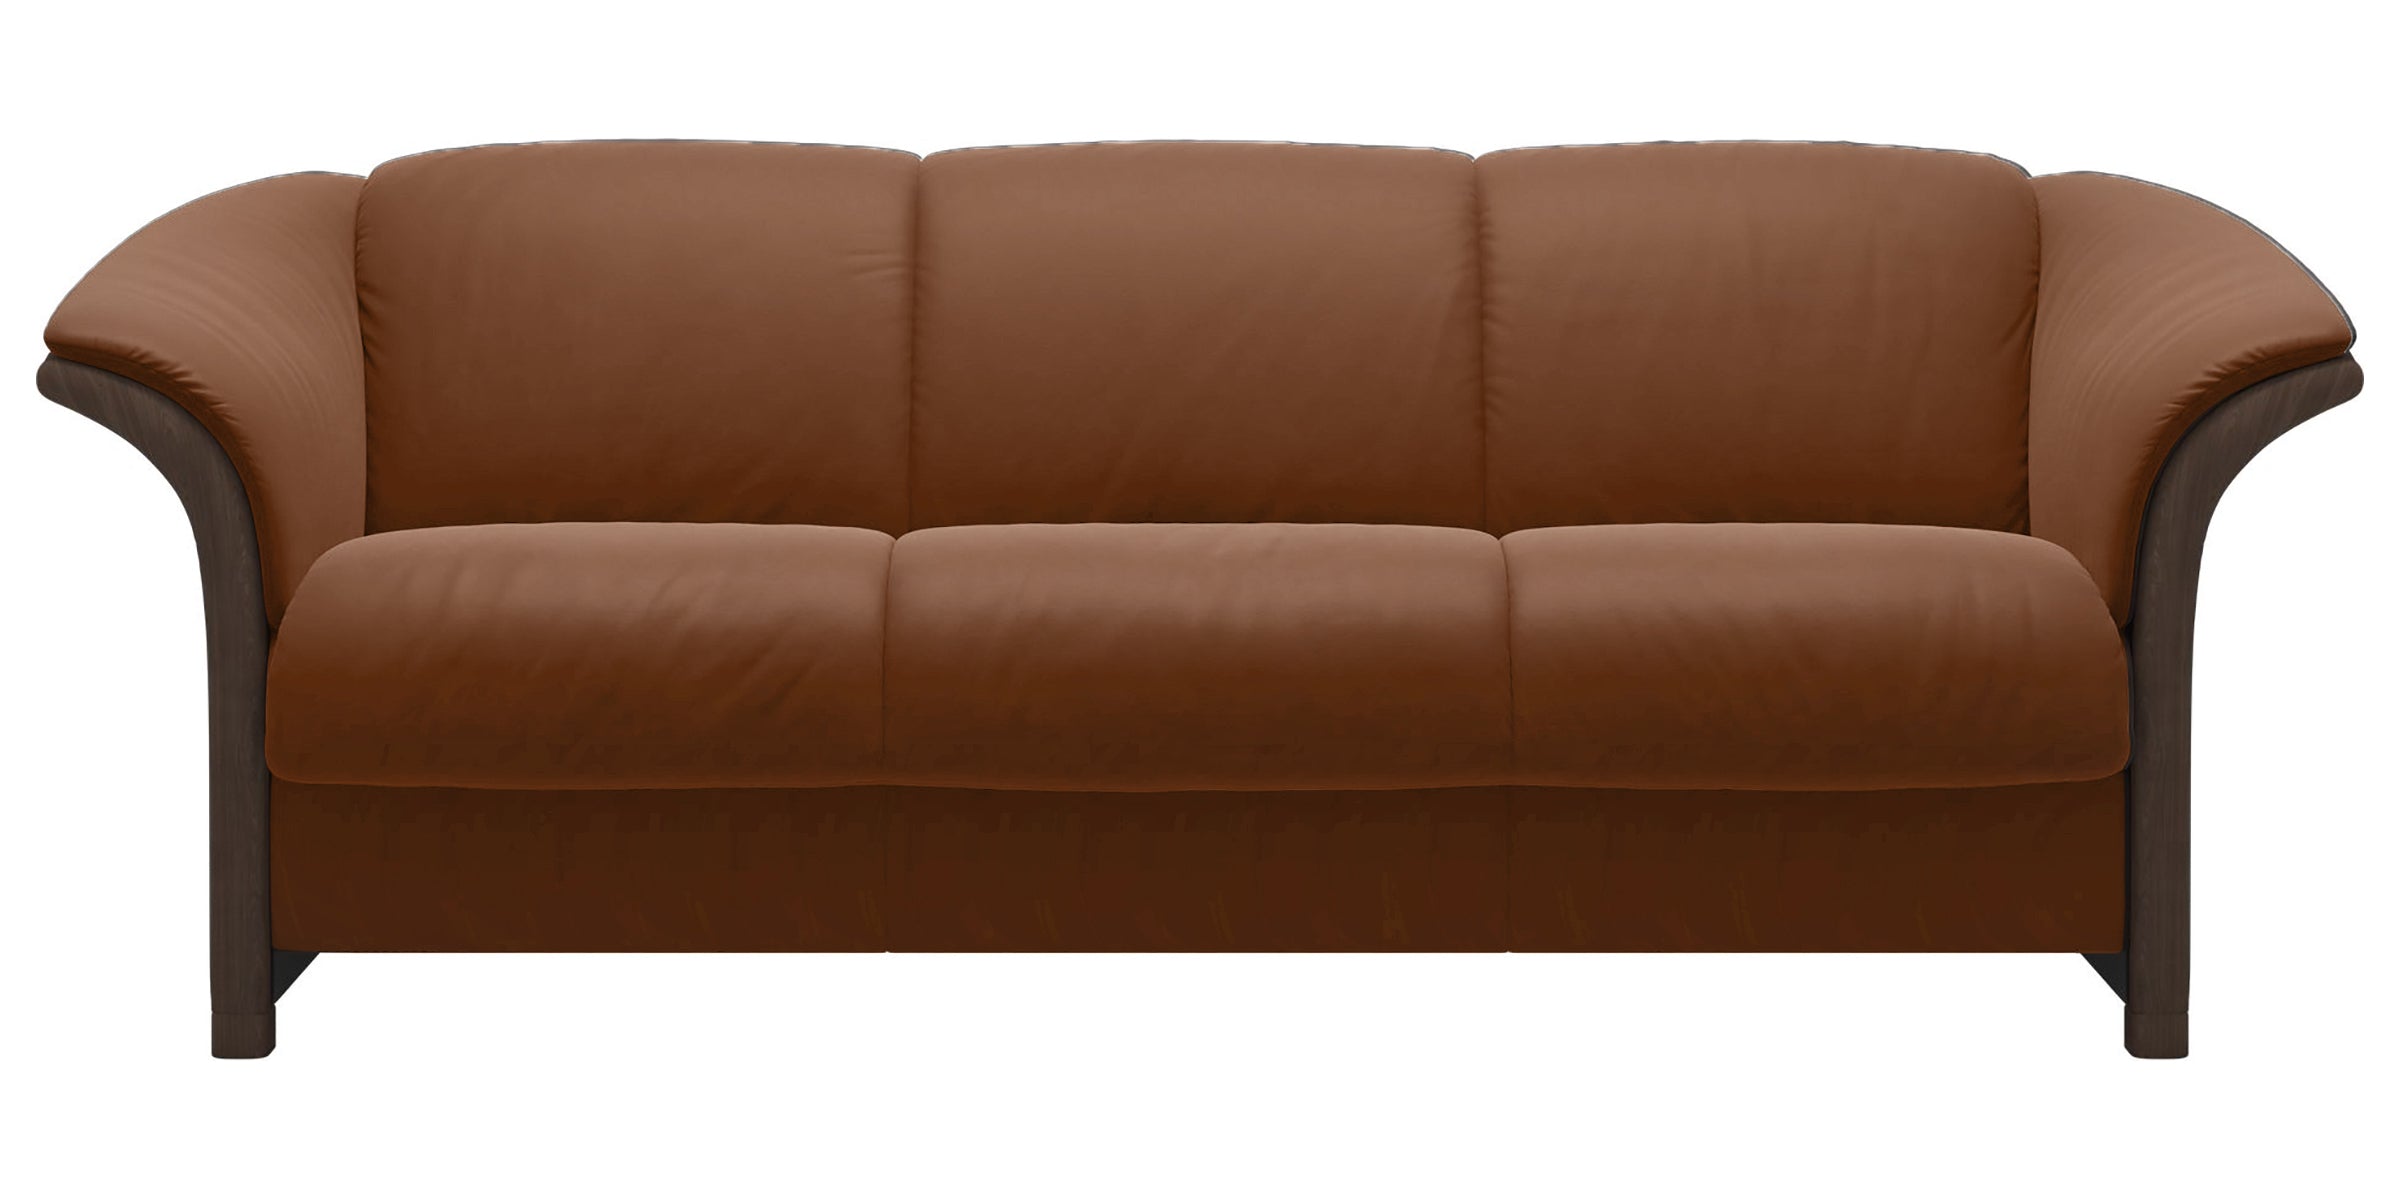 Paloma Leather New Cognac and Walnut Arm Trim | Stressless Manhattan Sofa | Valley Ridge Furniture